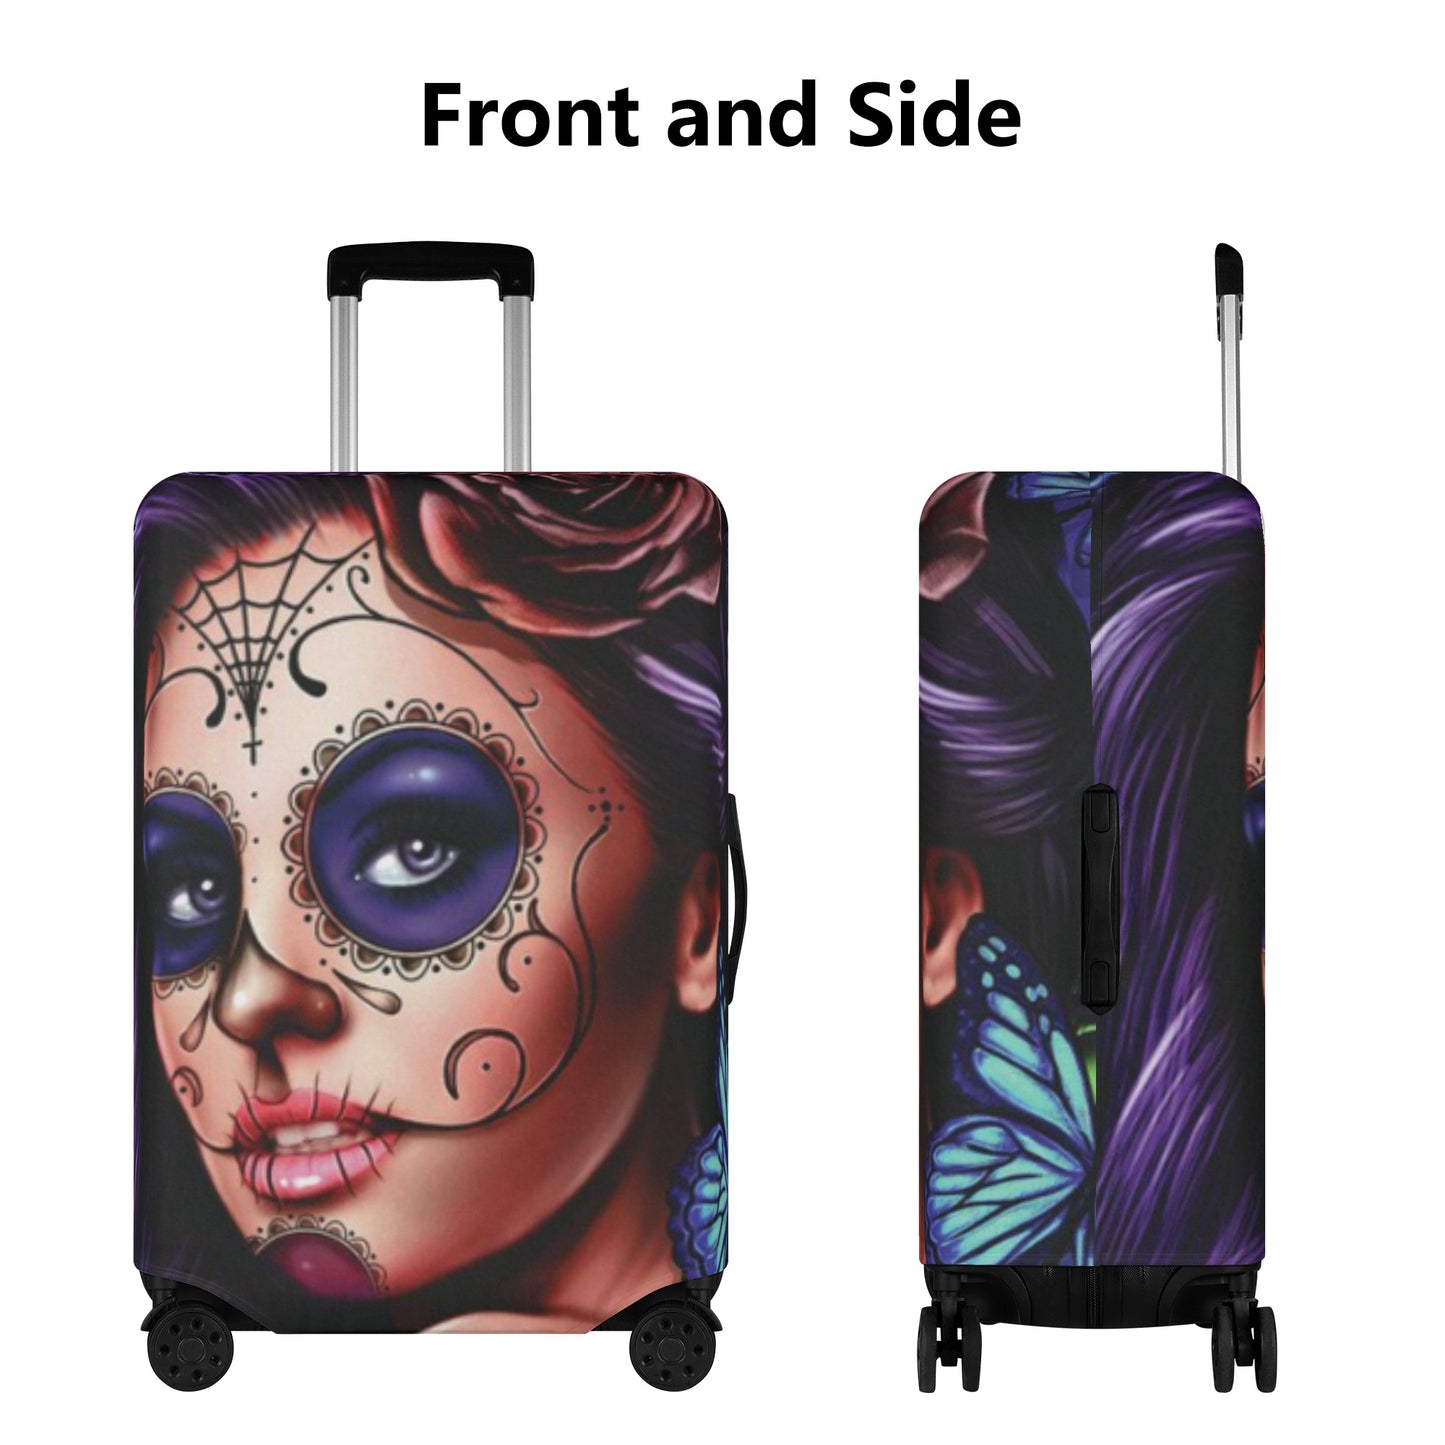 Sugar skull beautiful girl luggage suitcase cover set